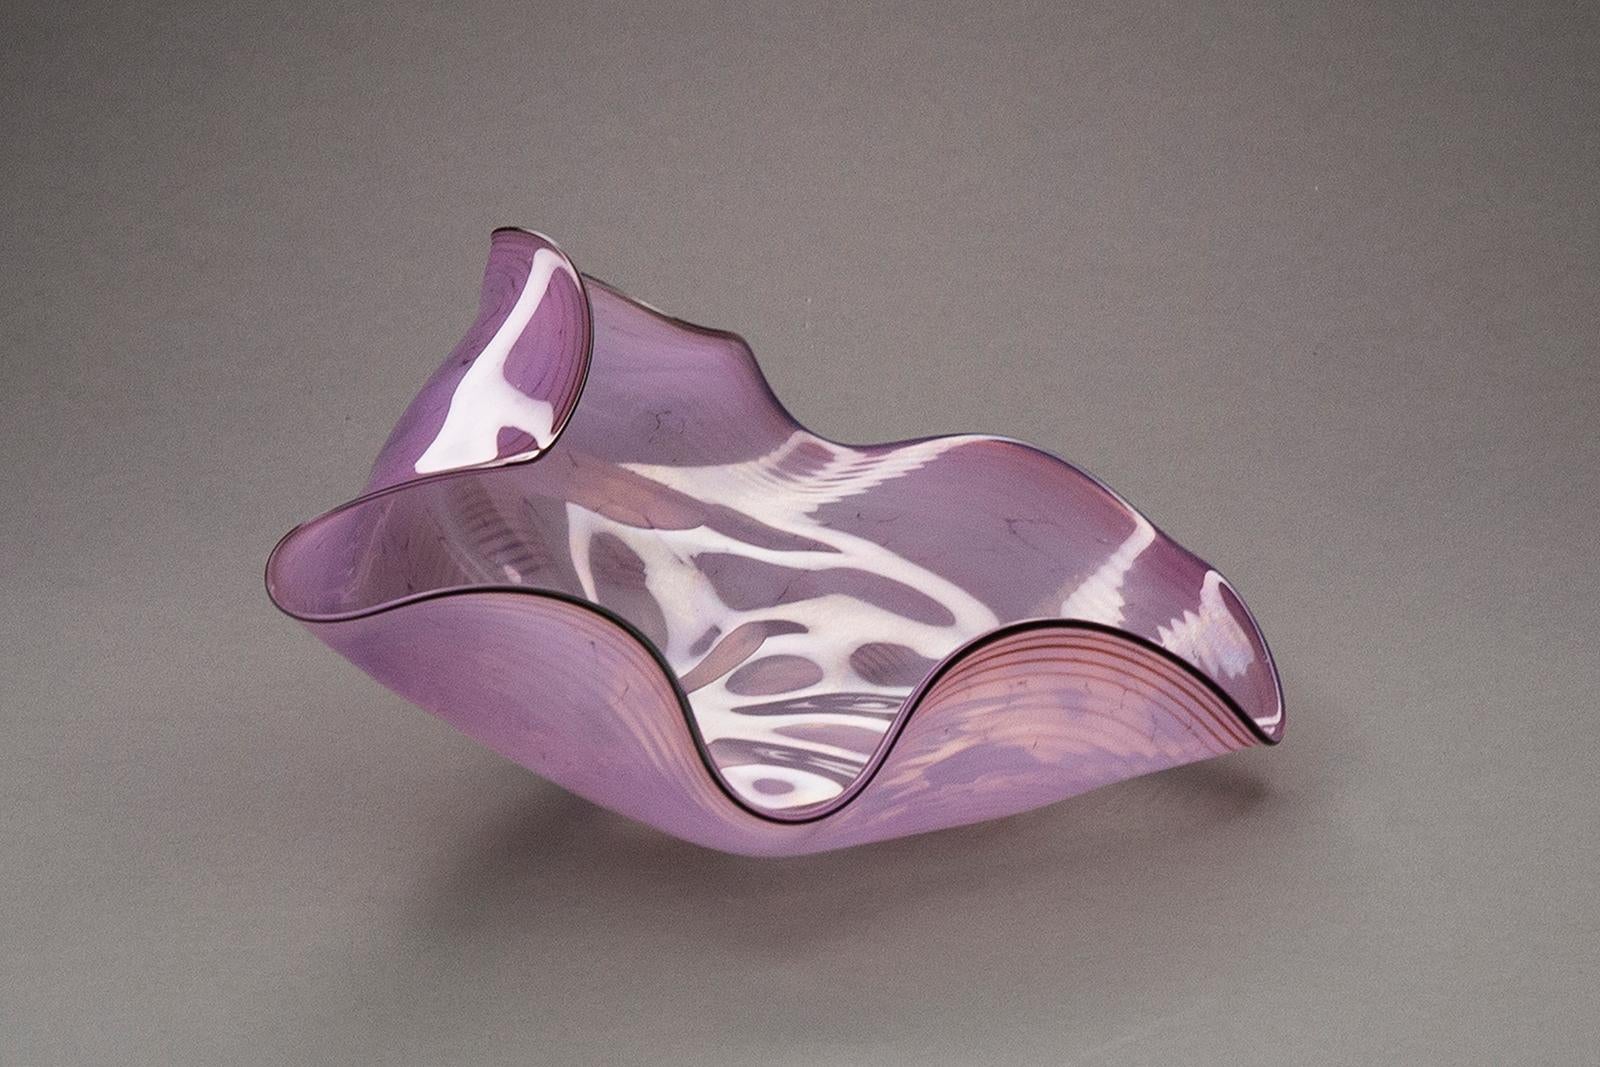 Artist: Dale Chihuly
Title: Purple Seaform
Medium: Handblown glass
Size: Measures 2 1/2